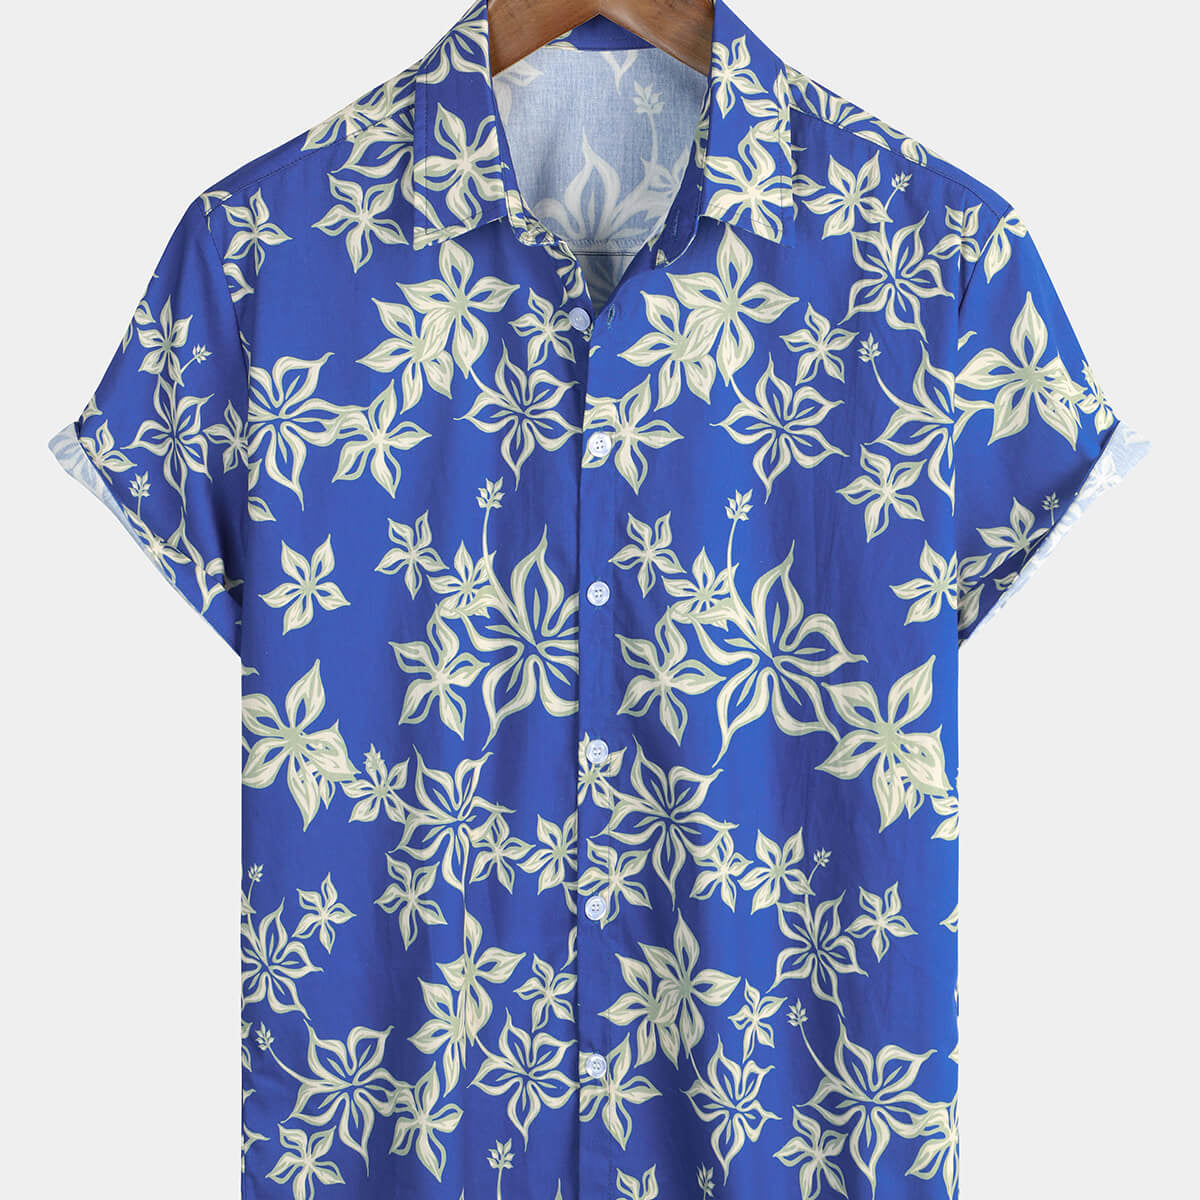 Men's Blue Floral Hawaiian Aloha 100% Cotton Vacation Shirt